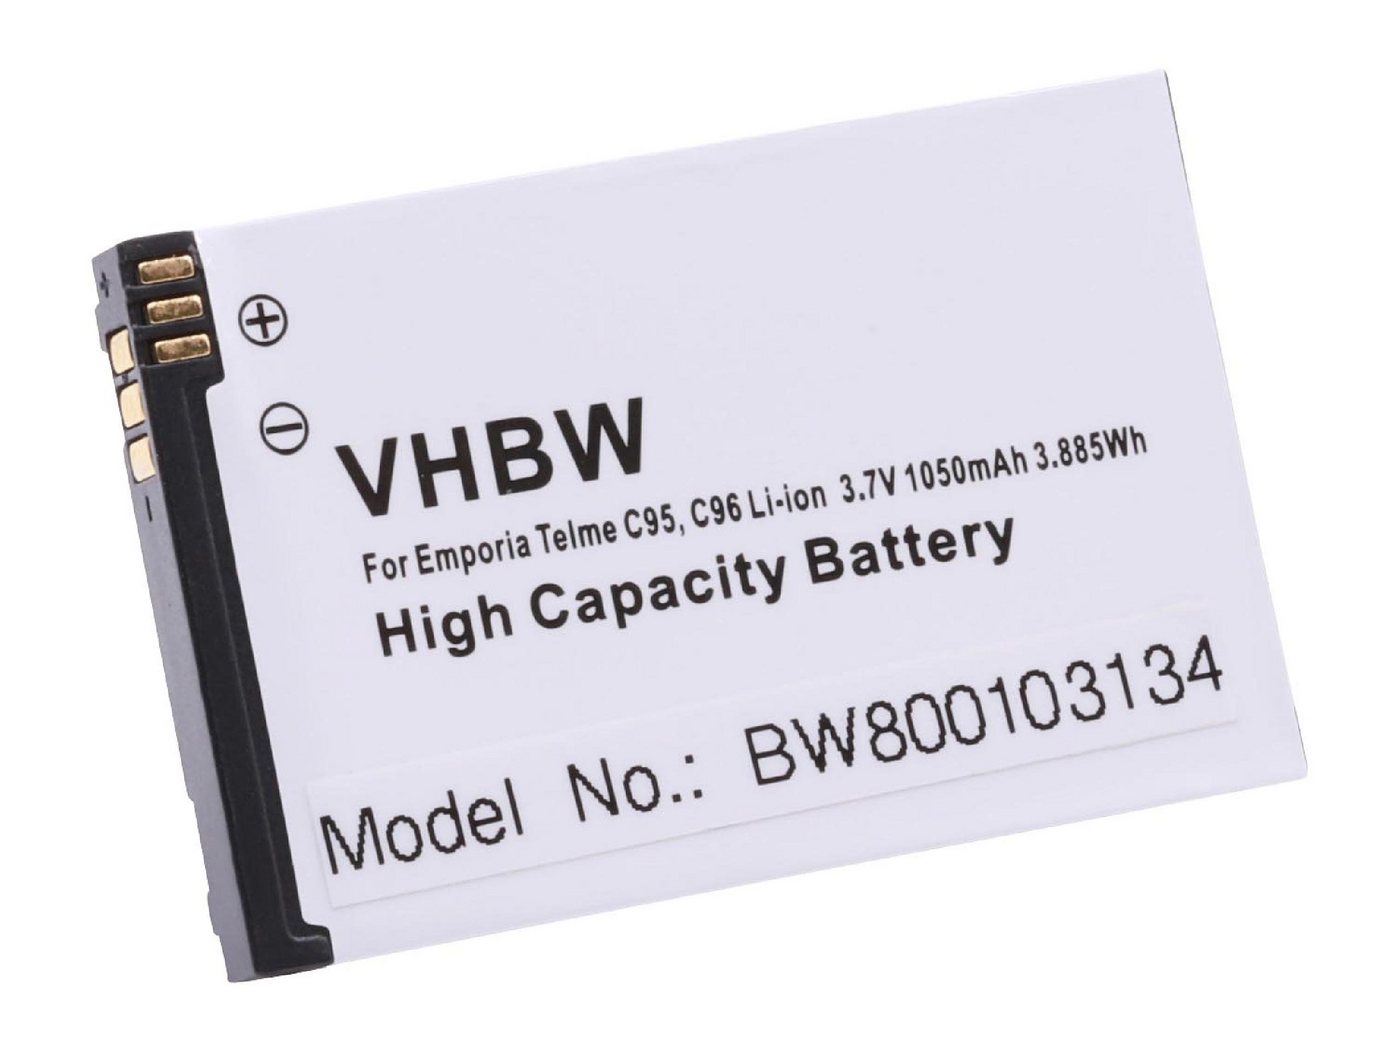 vhbw kompatibel mit Emporia Telme C100, C115, C95, C96, C135 Smartphone-Akku Li-Ion 1050 mAh (3,7 V) von vhbw